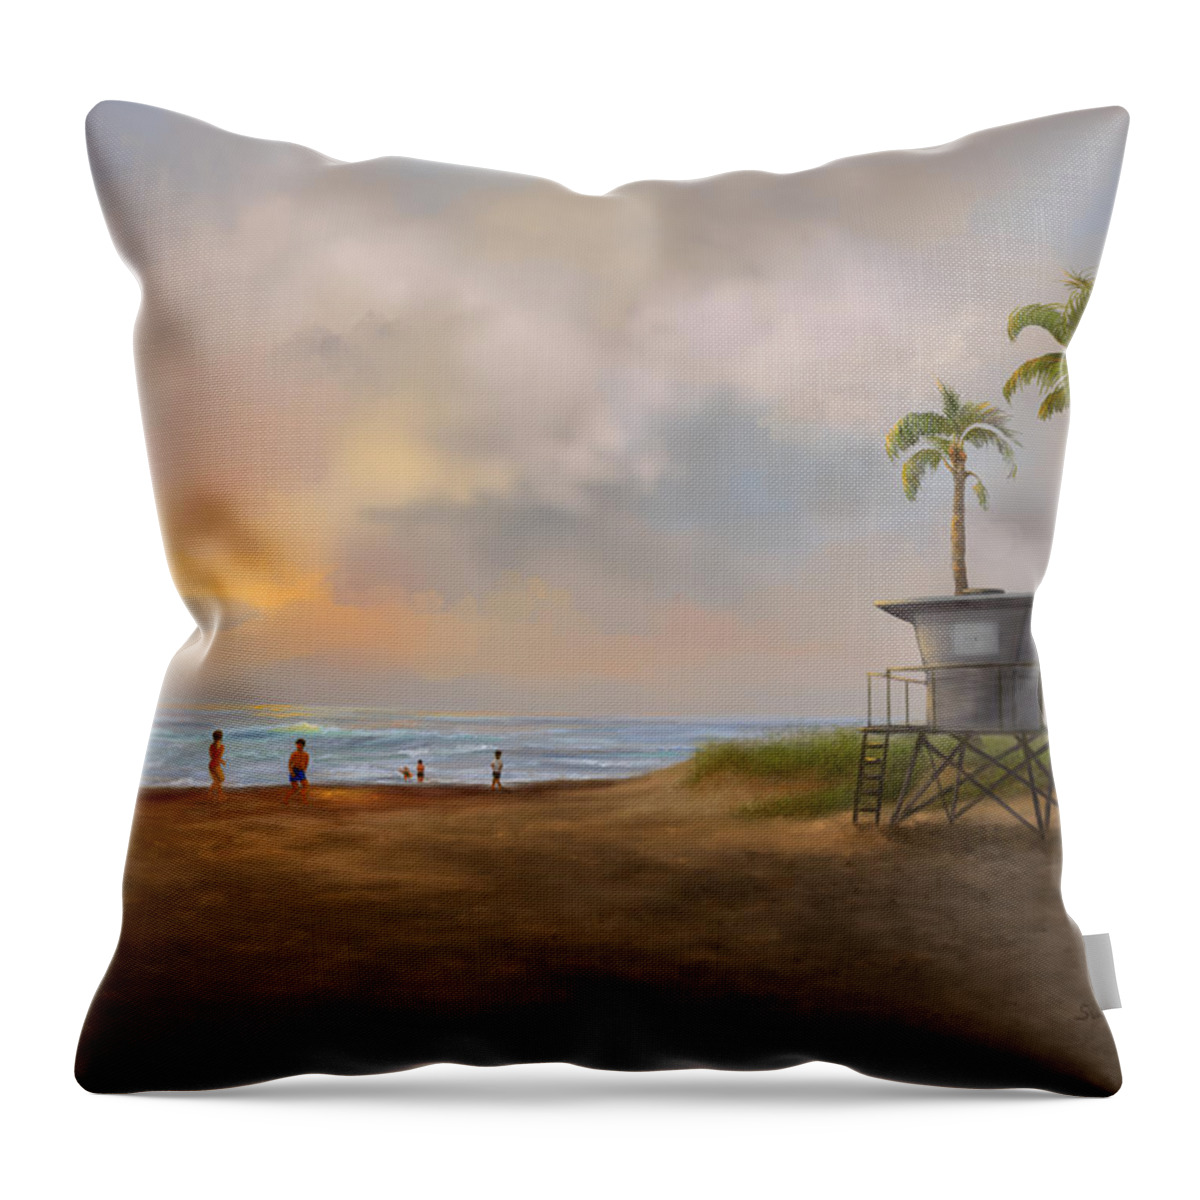 Beach Scenes Throw Pillow featuring the digital art Evening on the Beach by Sena Wilson